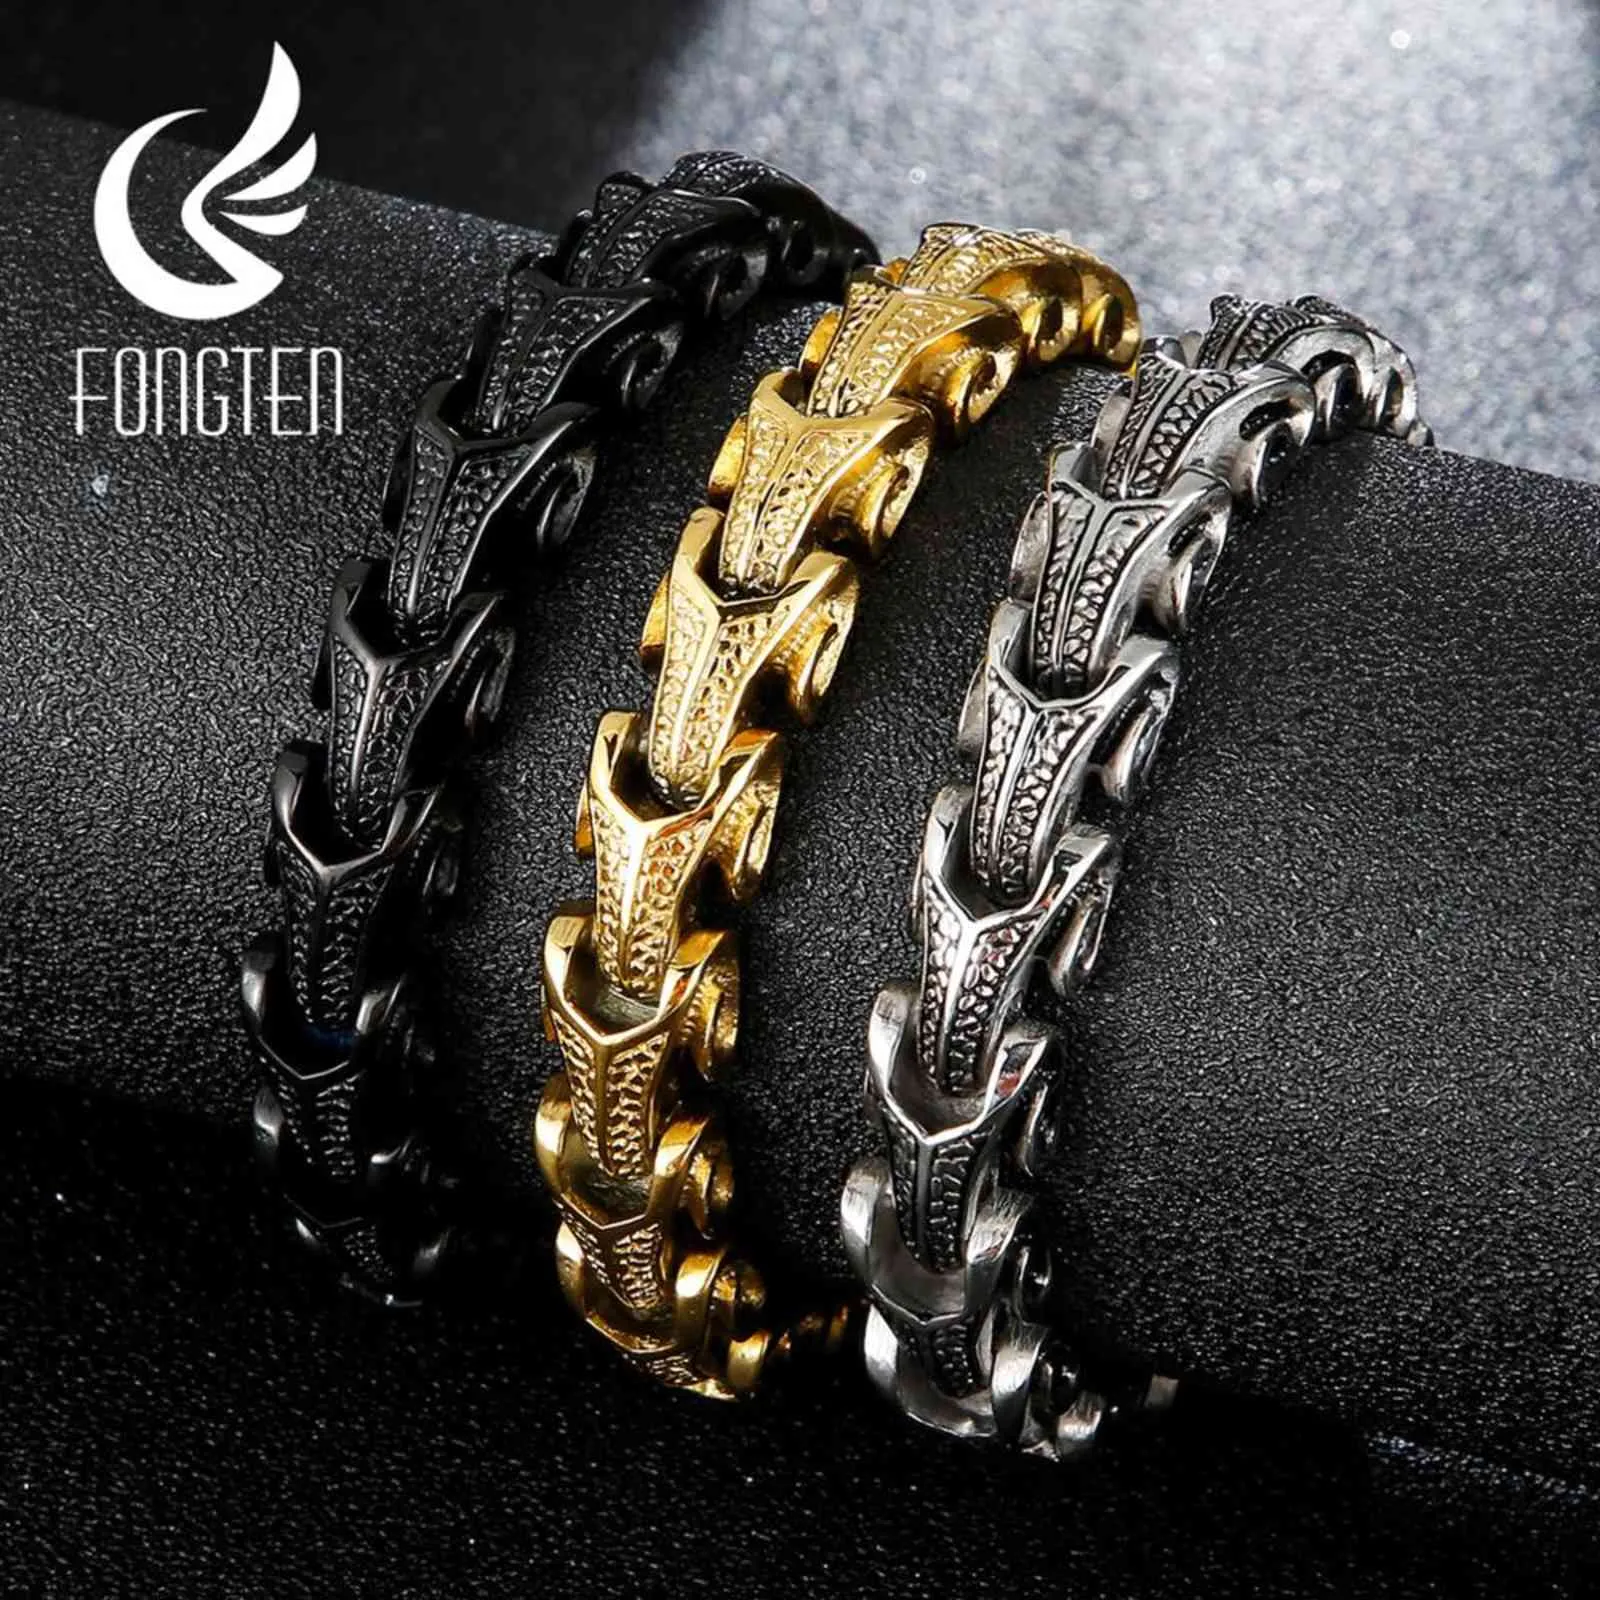 Fashion Genuine Leather Bracelet Wraps Casual Skin Friendly Bracelets for  Men Boys